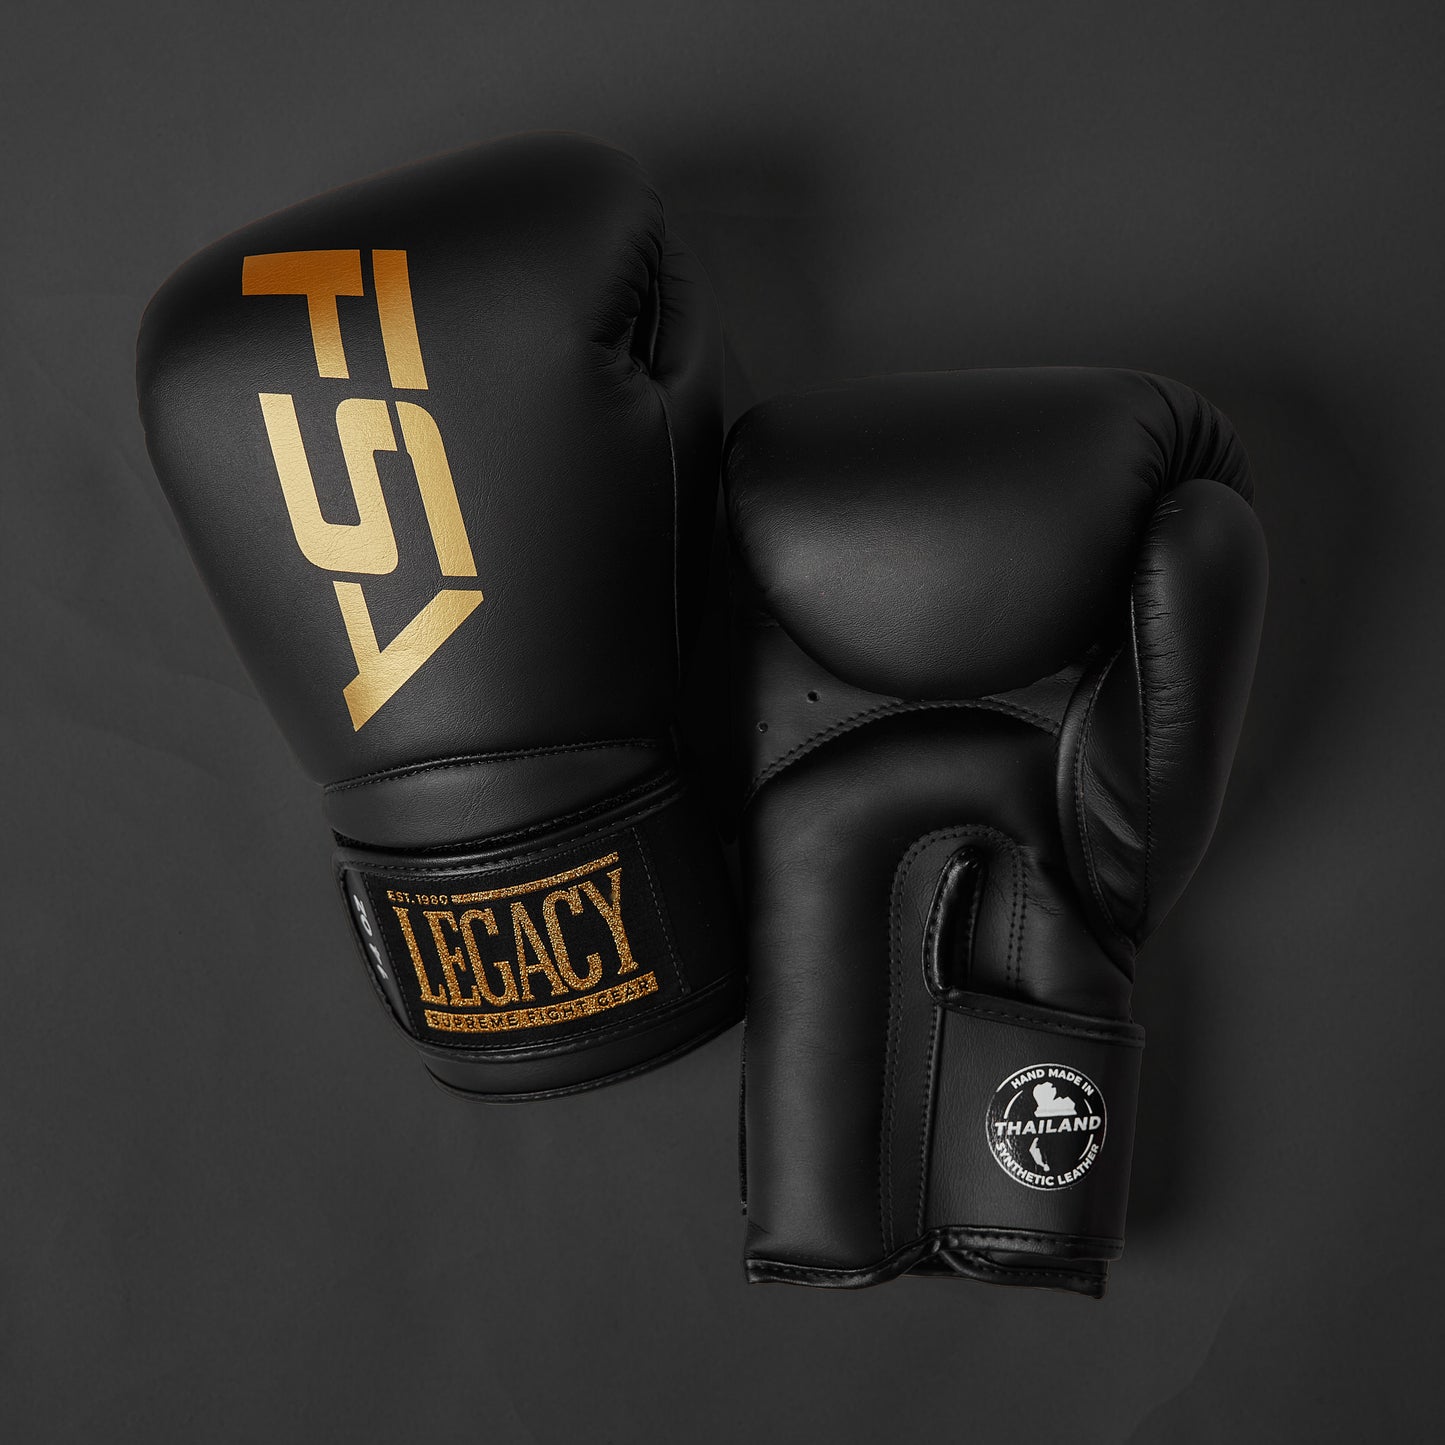 Boxing Gloves FSA x Legacy Black